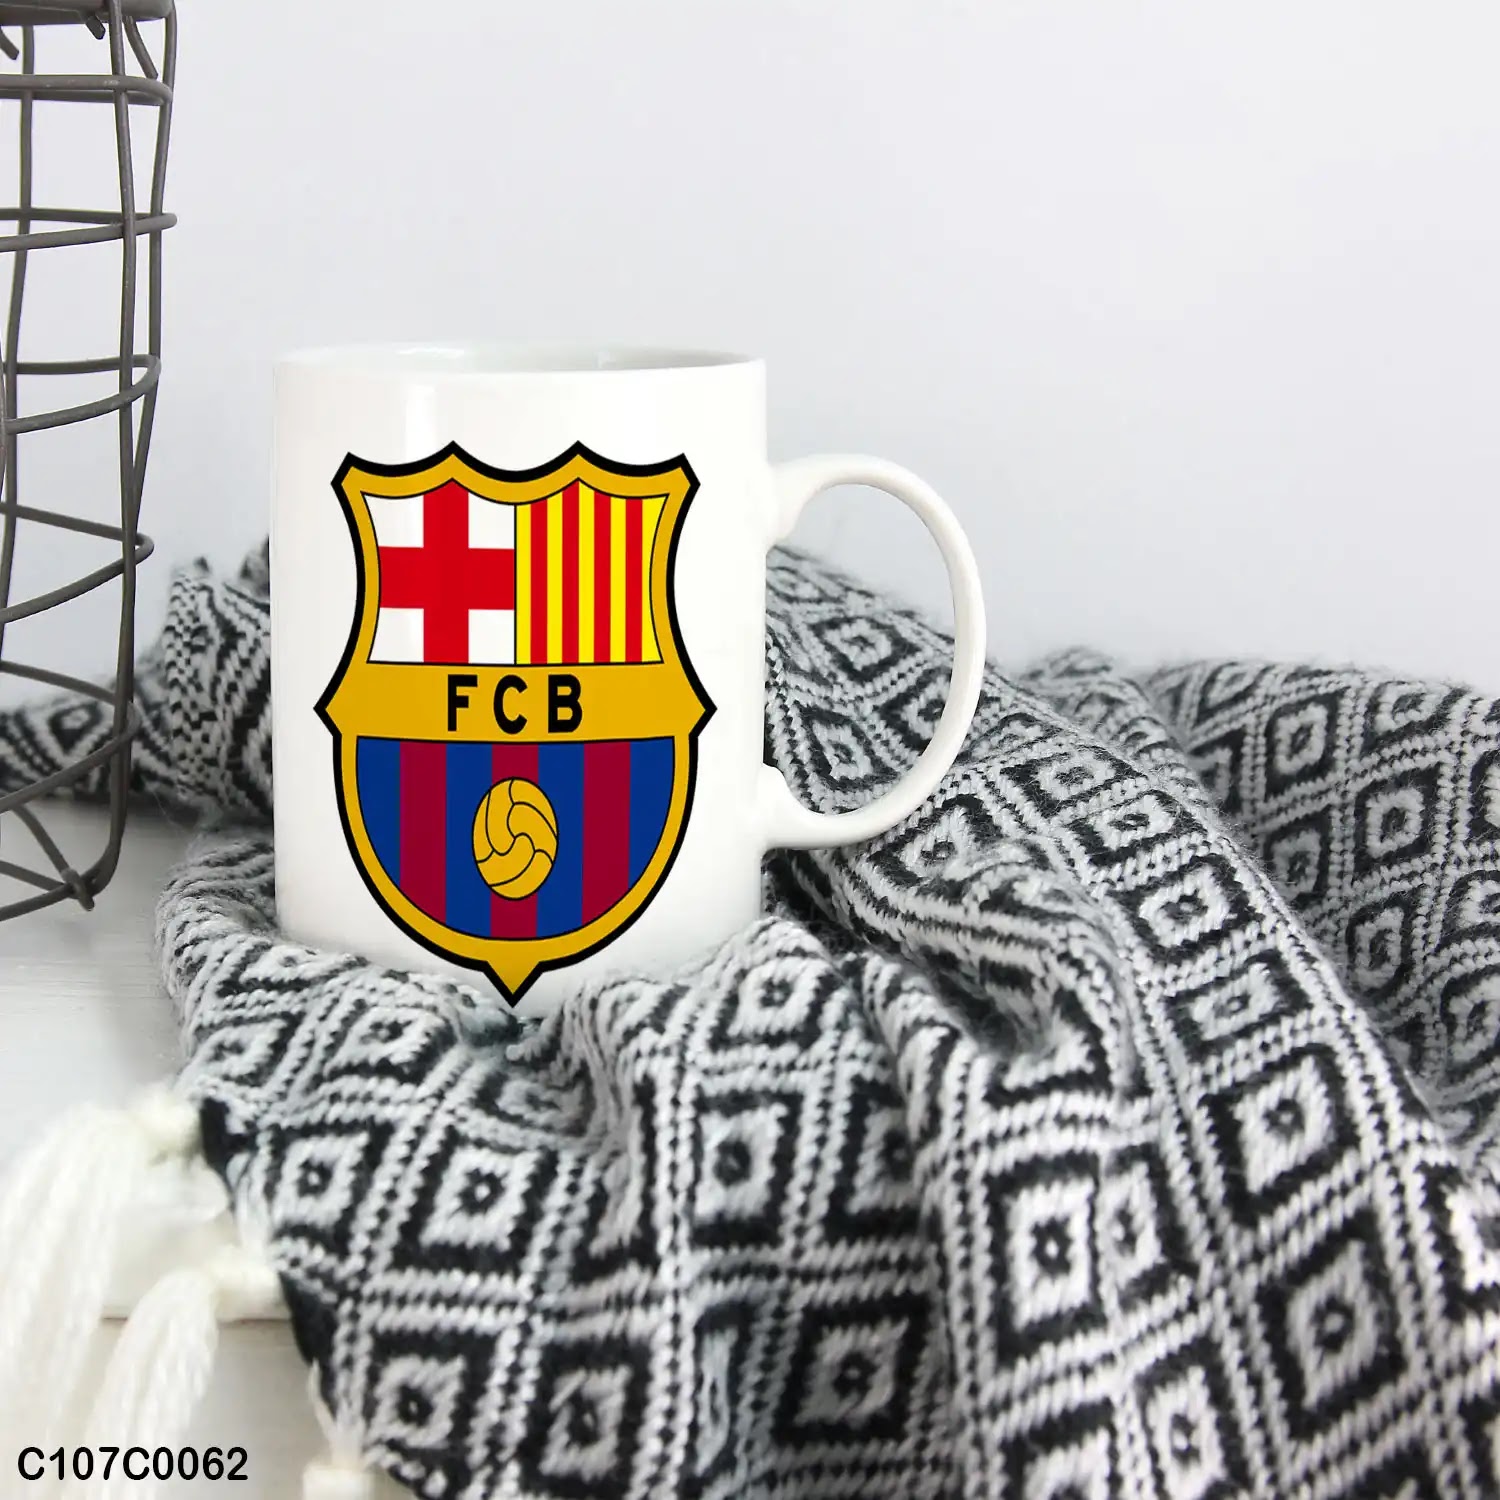 A mug (cup) printed with an image of a Barcelona logo